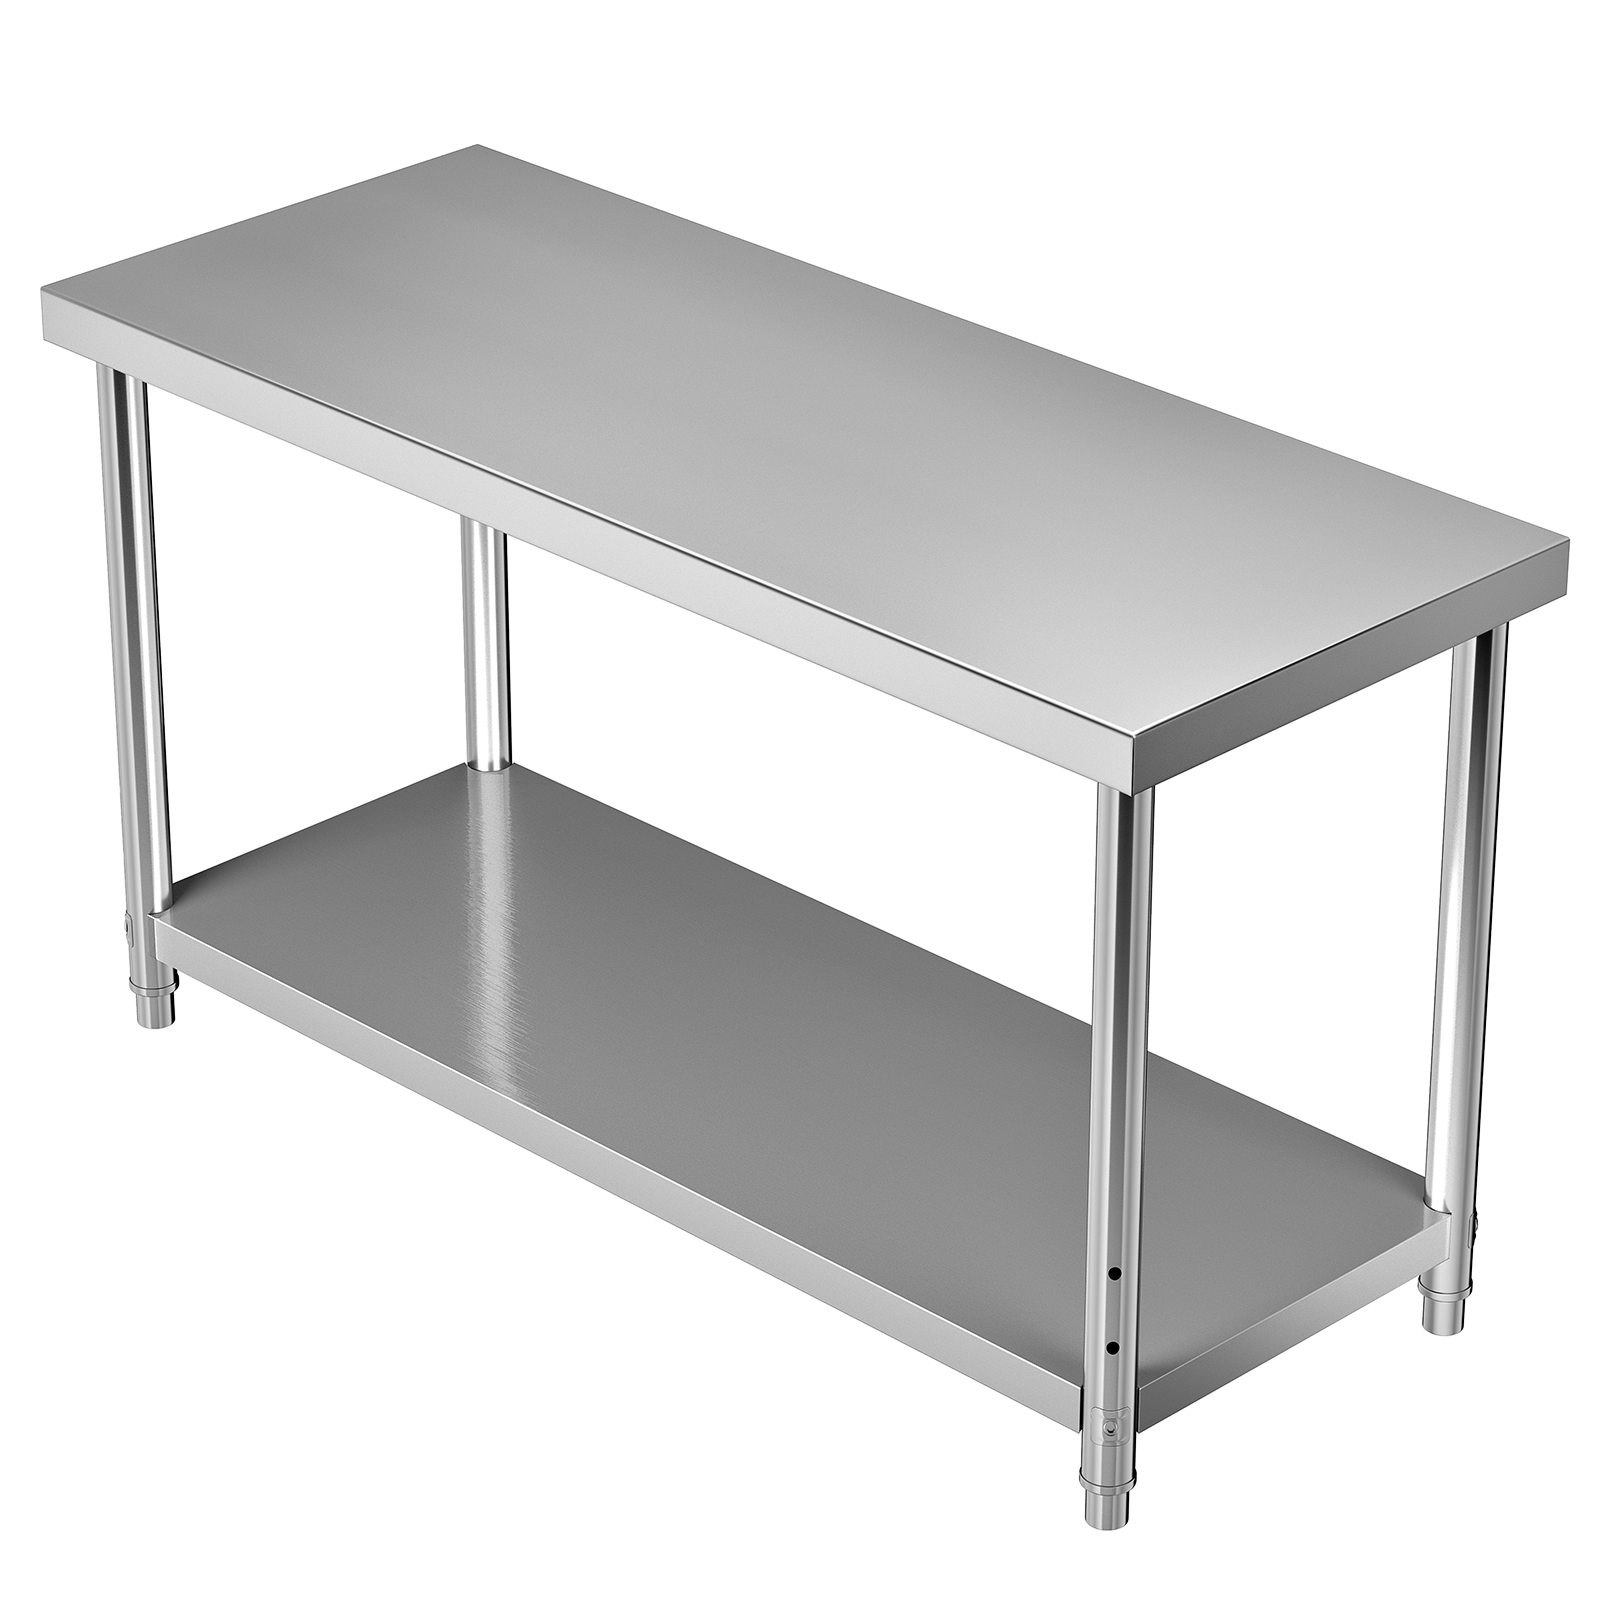 Work Prep Table,Stainless Steel,Adjustable Undershelf